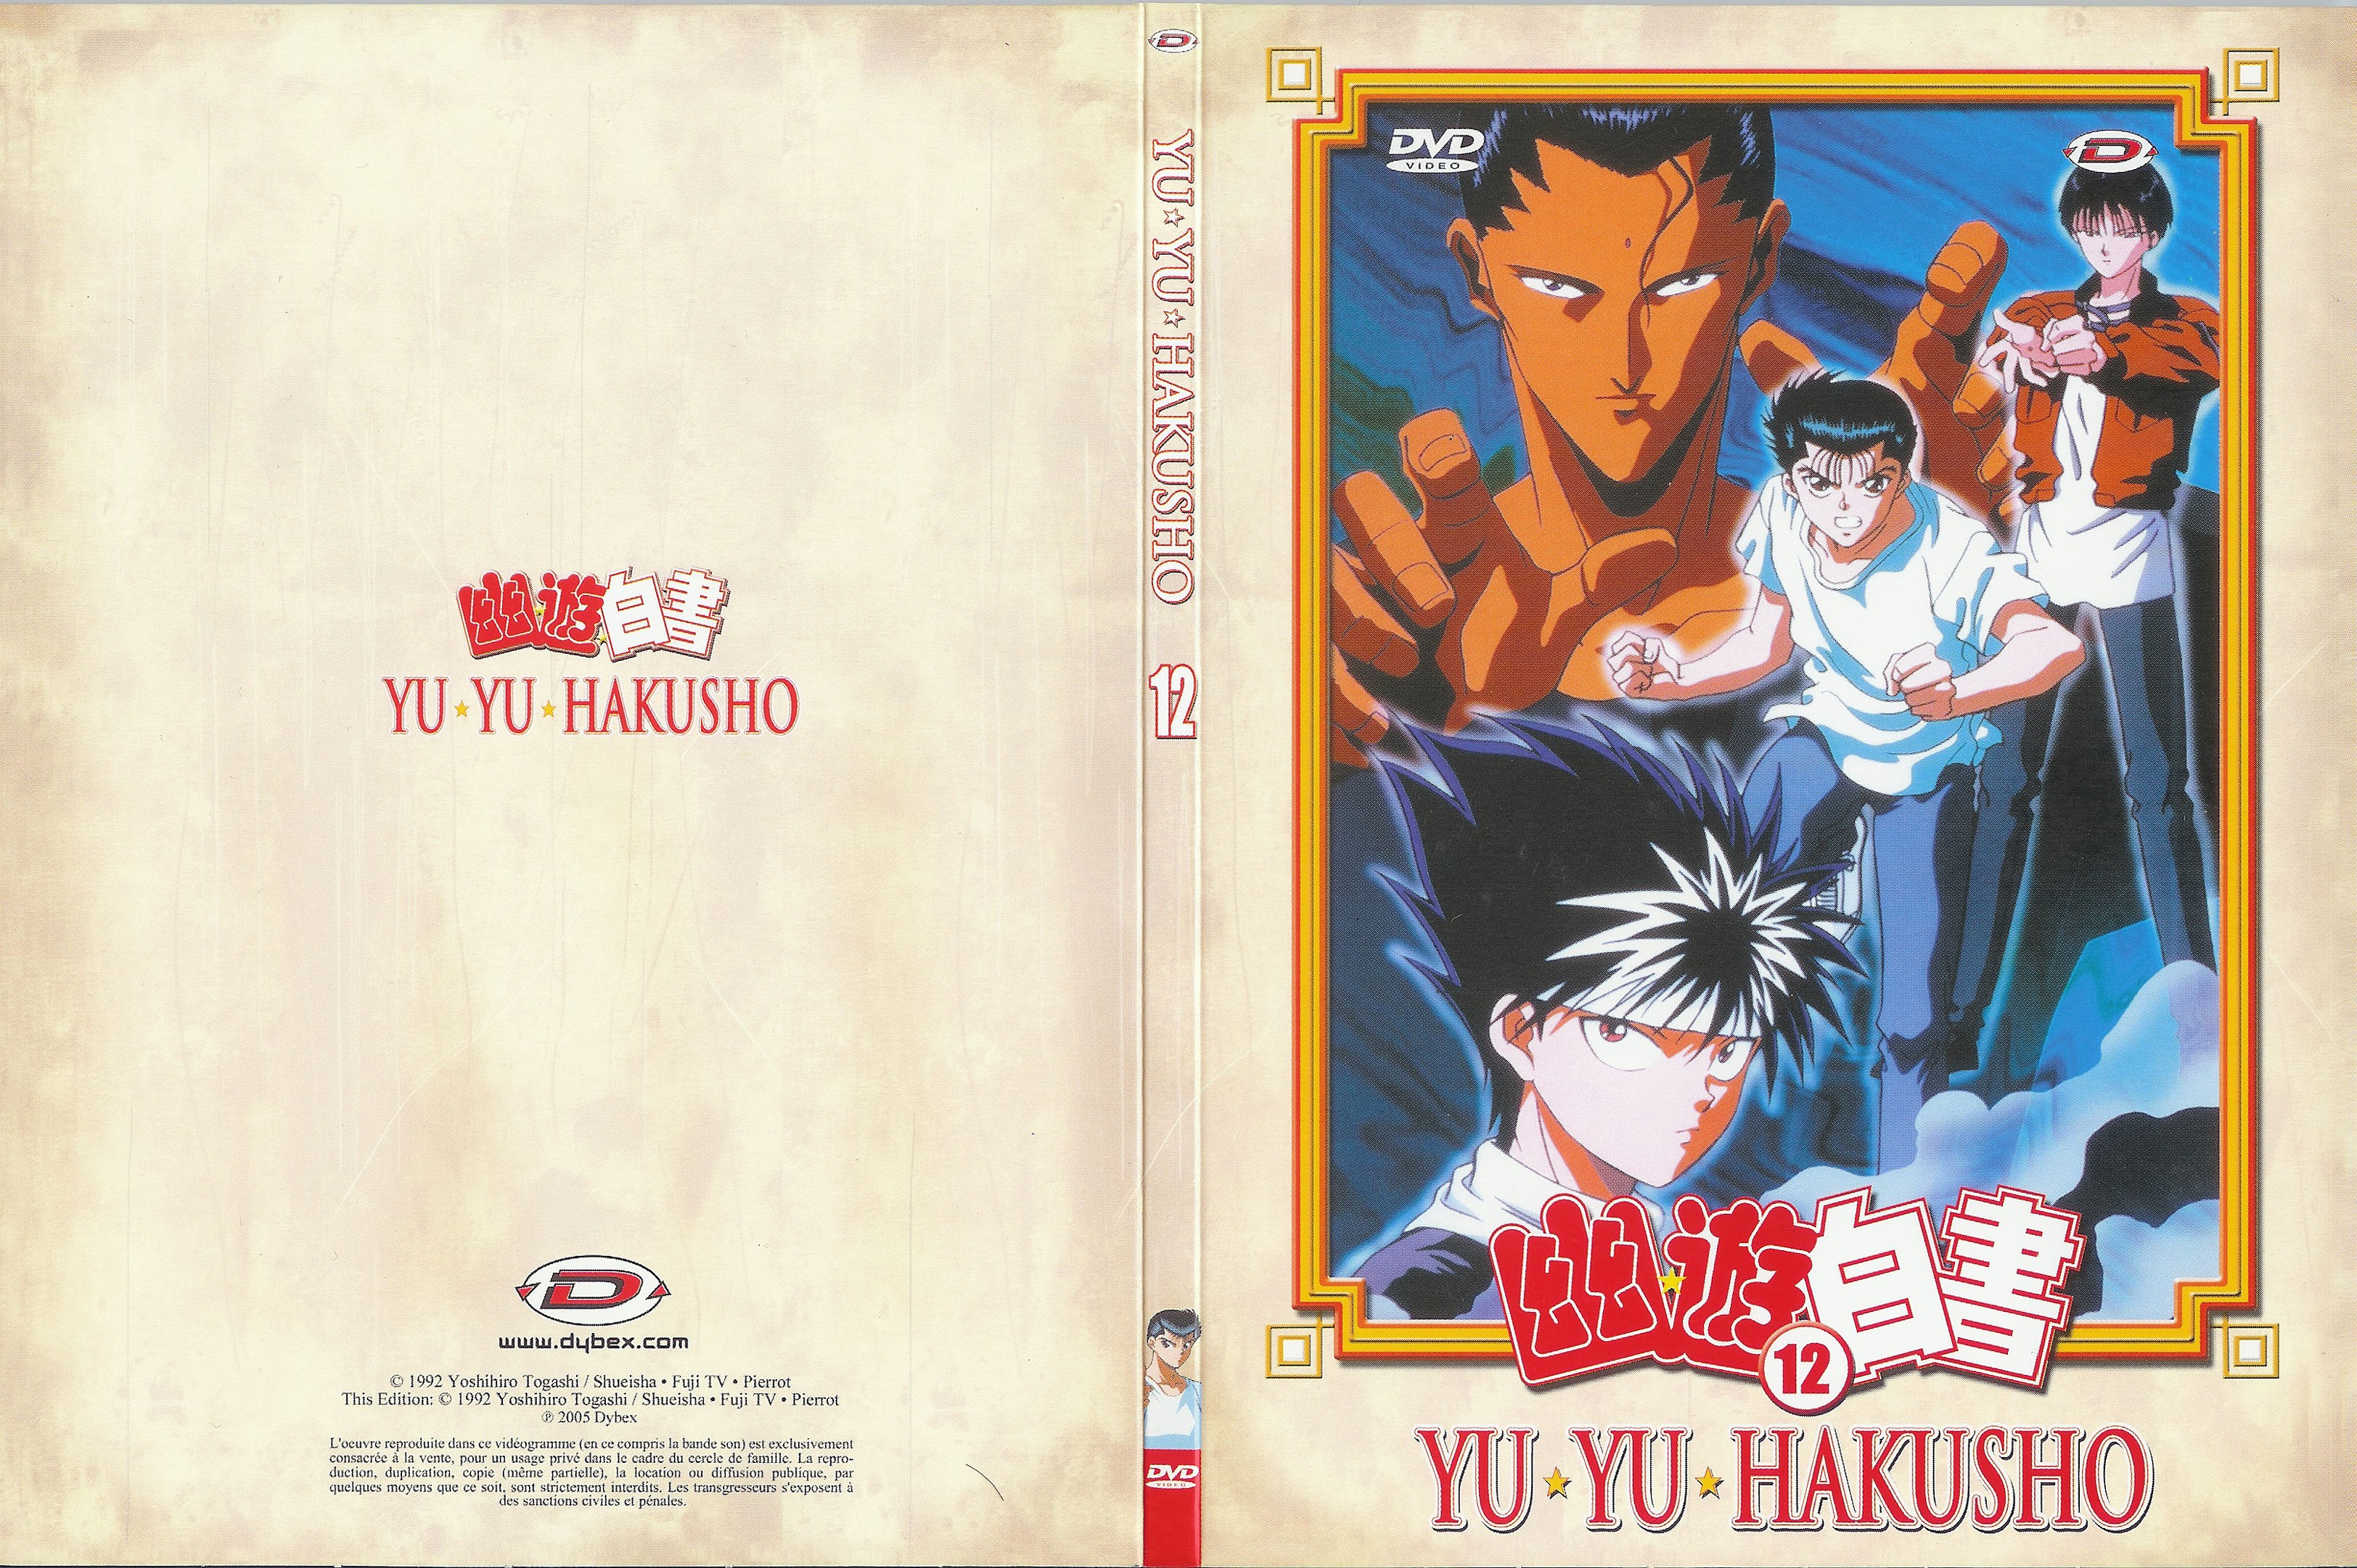 Jaquette DVD Yu yu hakusho vol 12